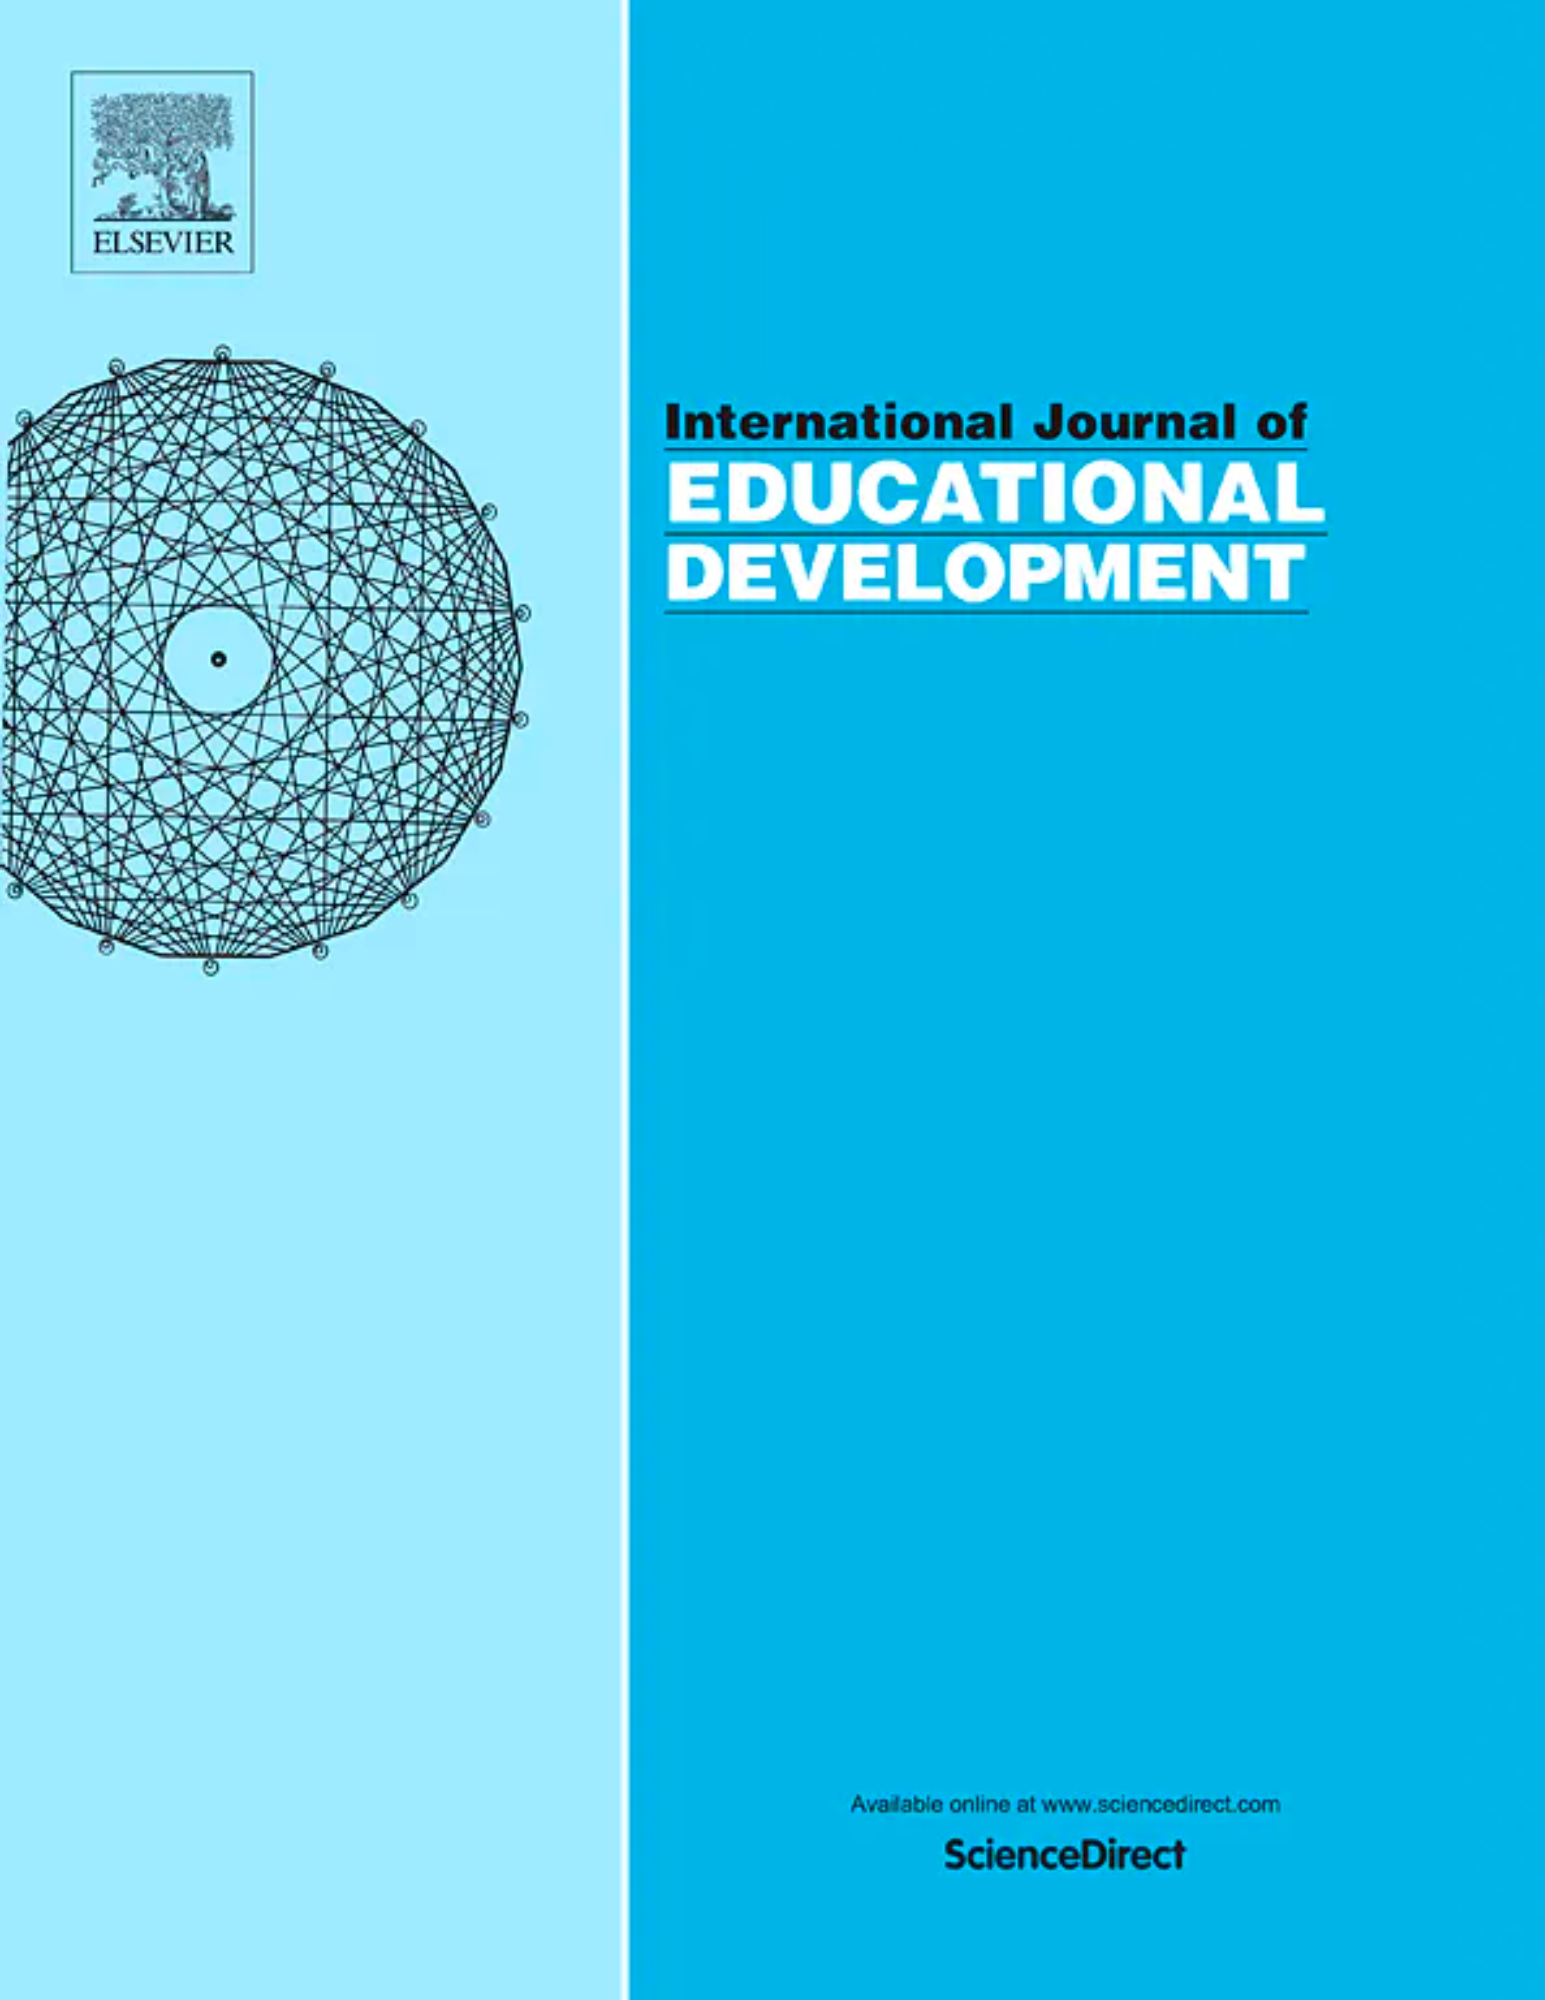 Educational development journal